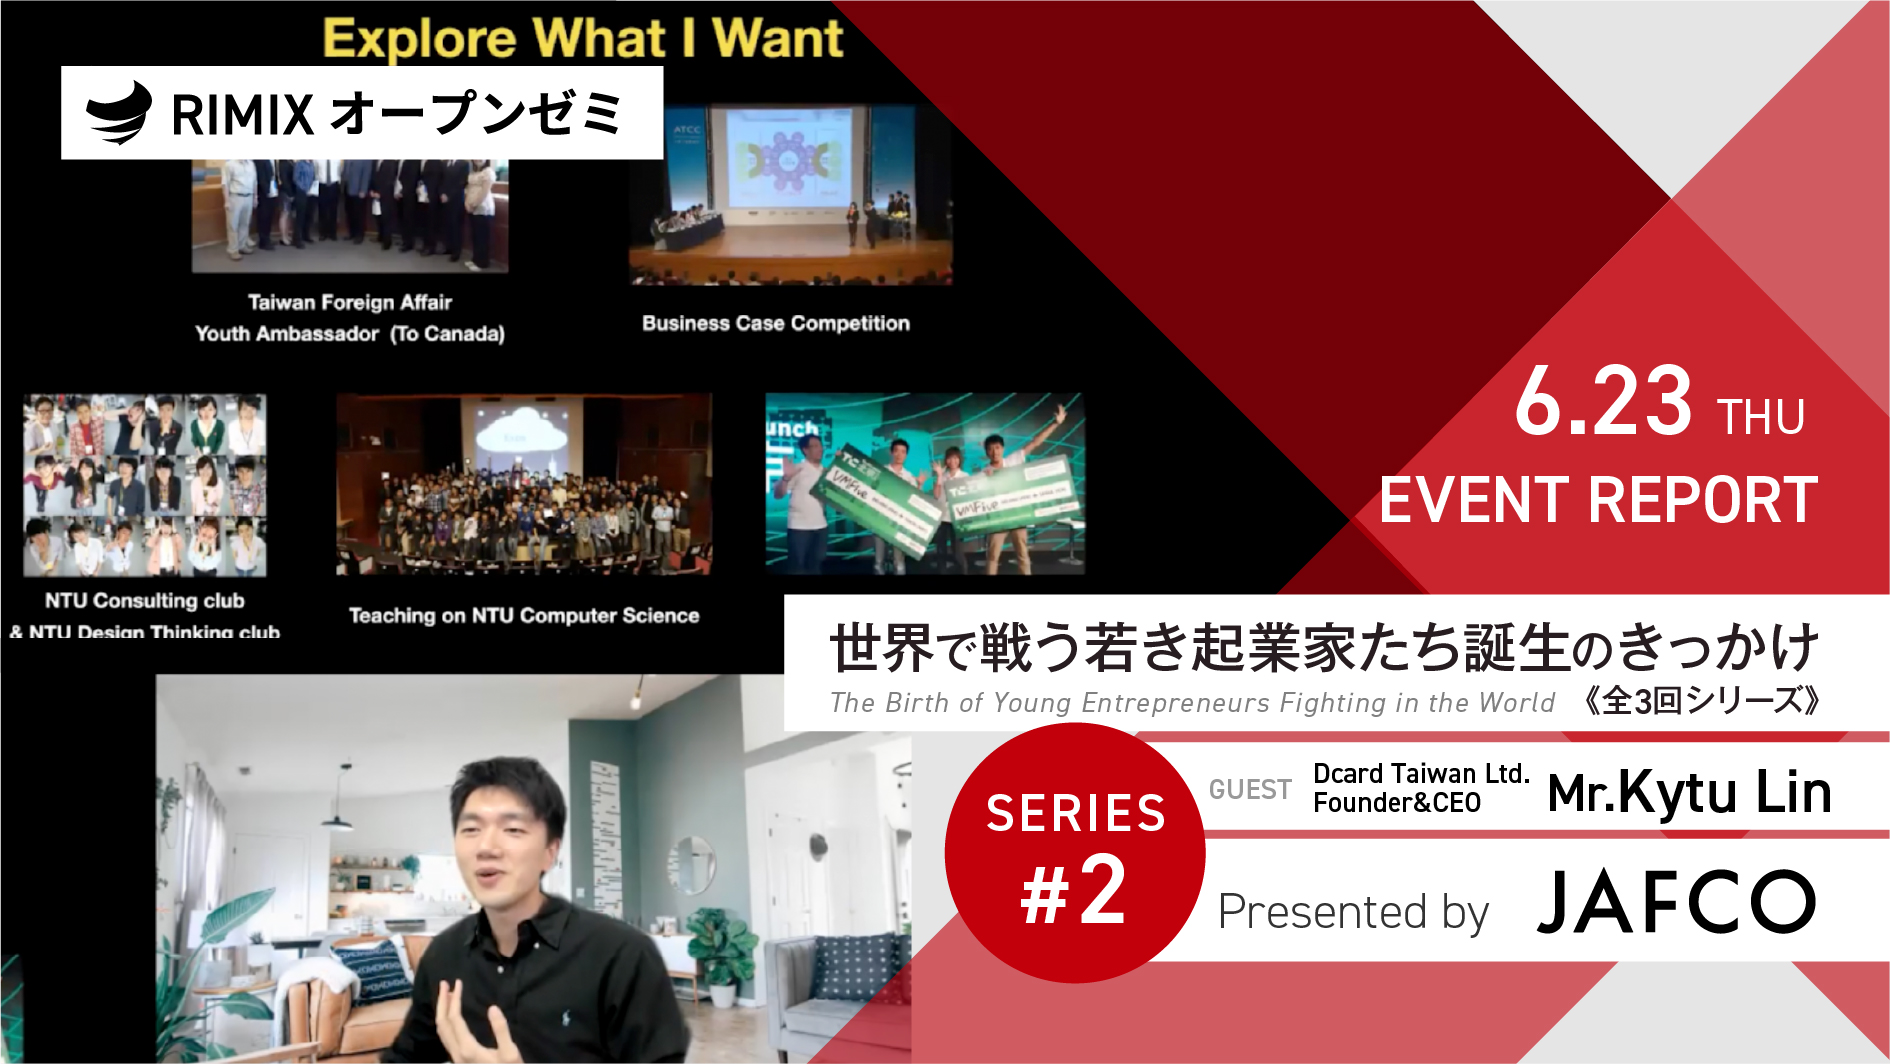 【RIMIXオープンゼミ】世界で戦う若き起業家たち誕生のきっかけ Presented by JAFCO Asia《シリーズ第2回｜Dcard Taiwan Ltd.  Founder&CEO / Kytu Lin氏》開催報告